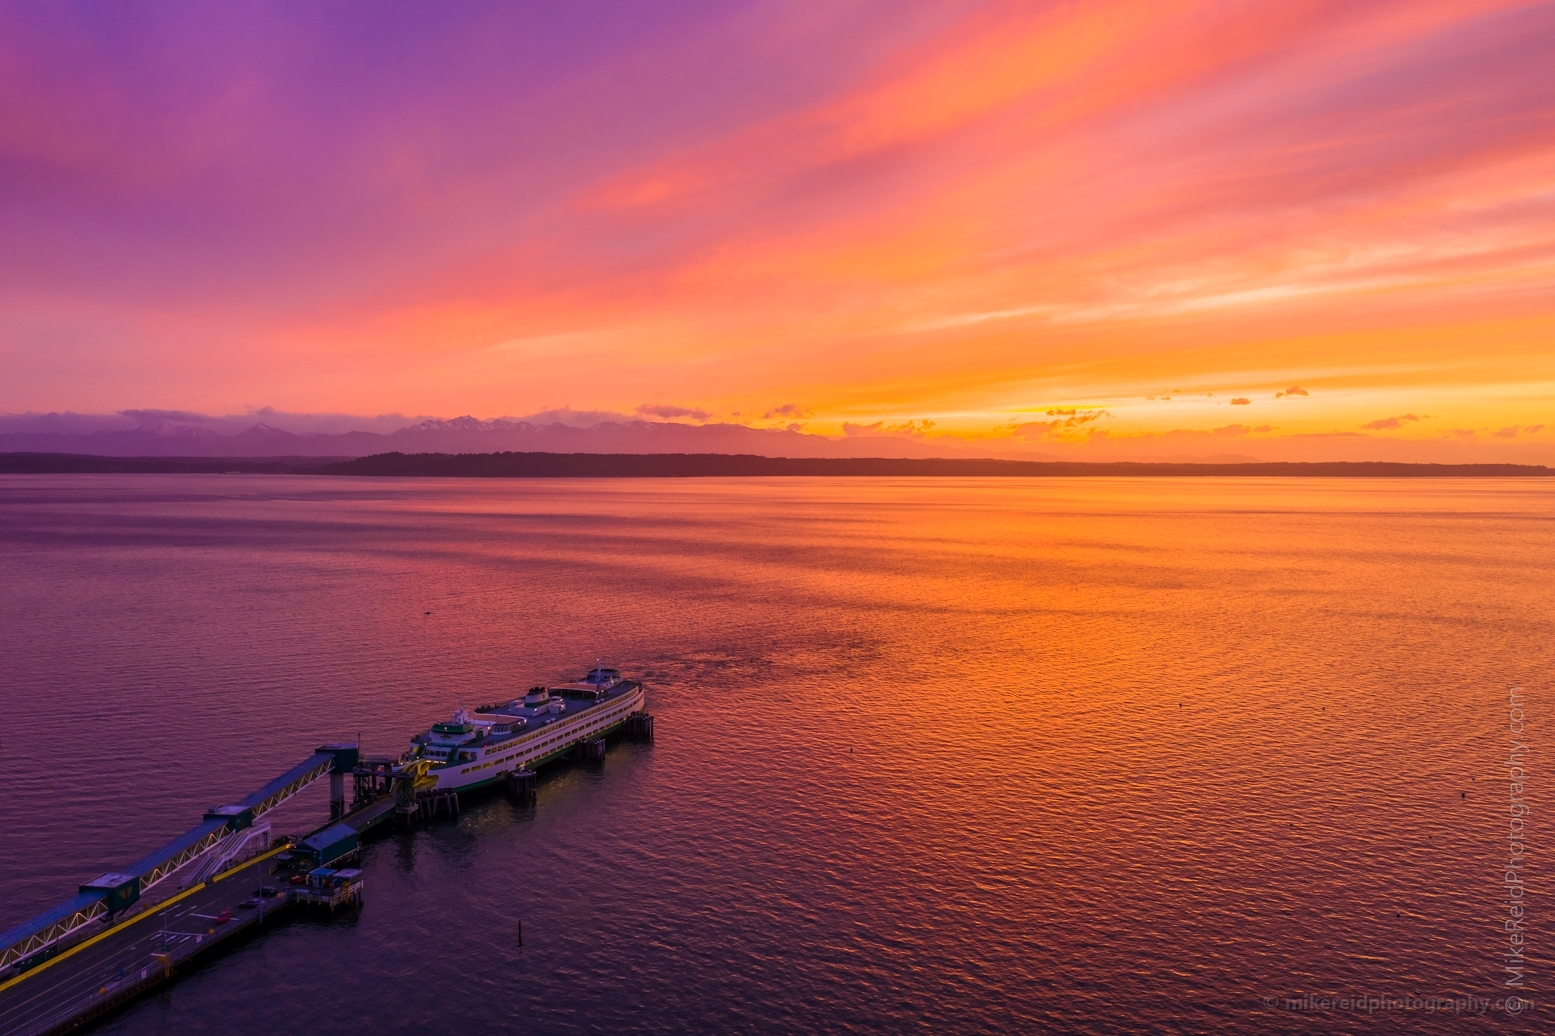 Edmonds Ferry Docked At Sunset From Above Mavic Pro 2.jpg